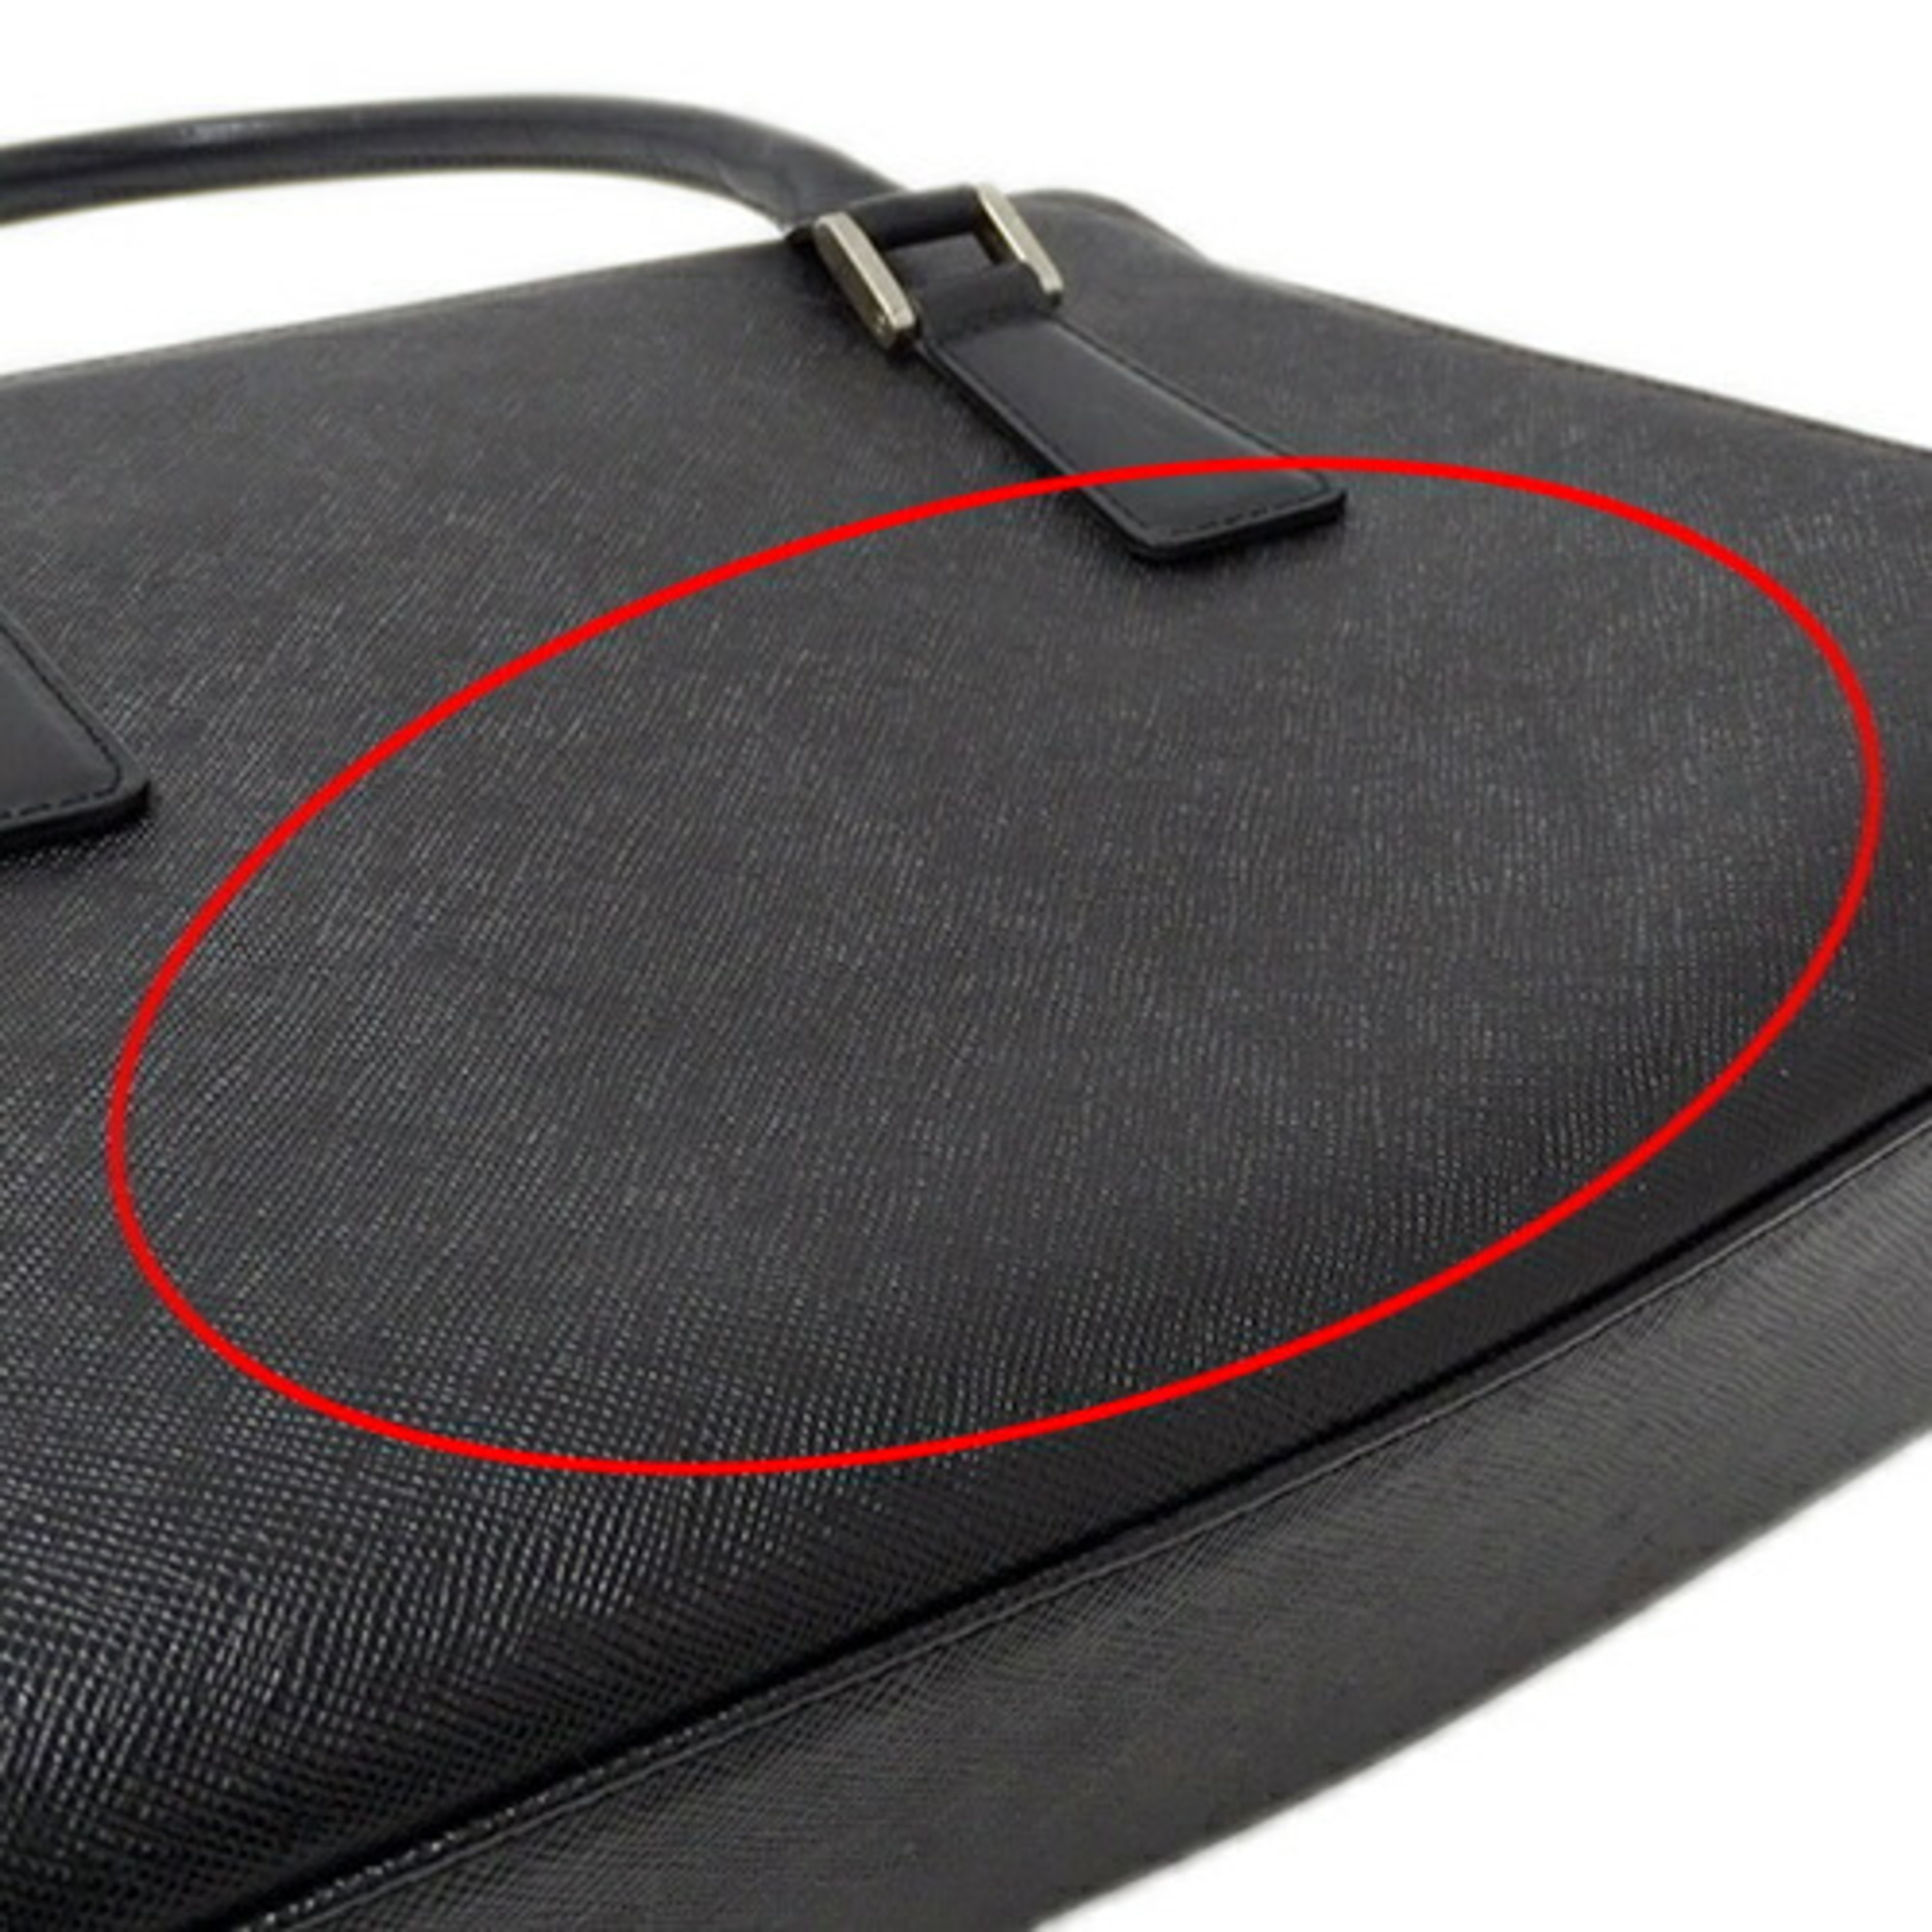 Burberry BURBERRY Bag Women's Handbag Leather Black Compact